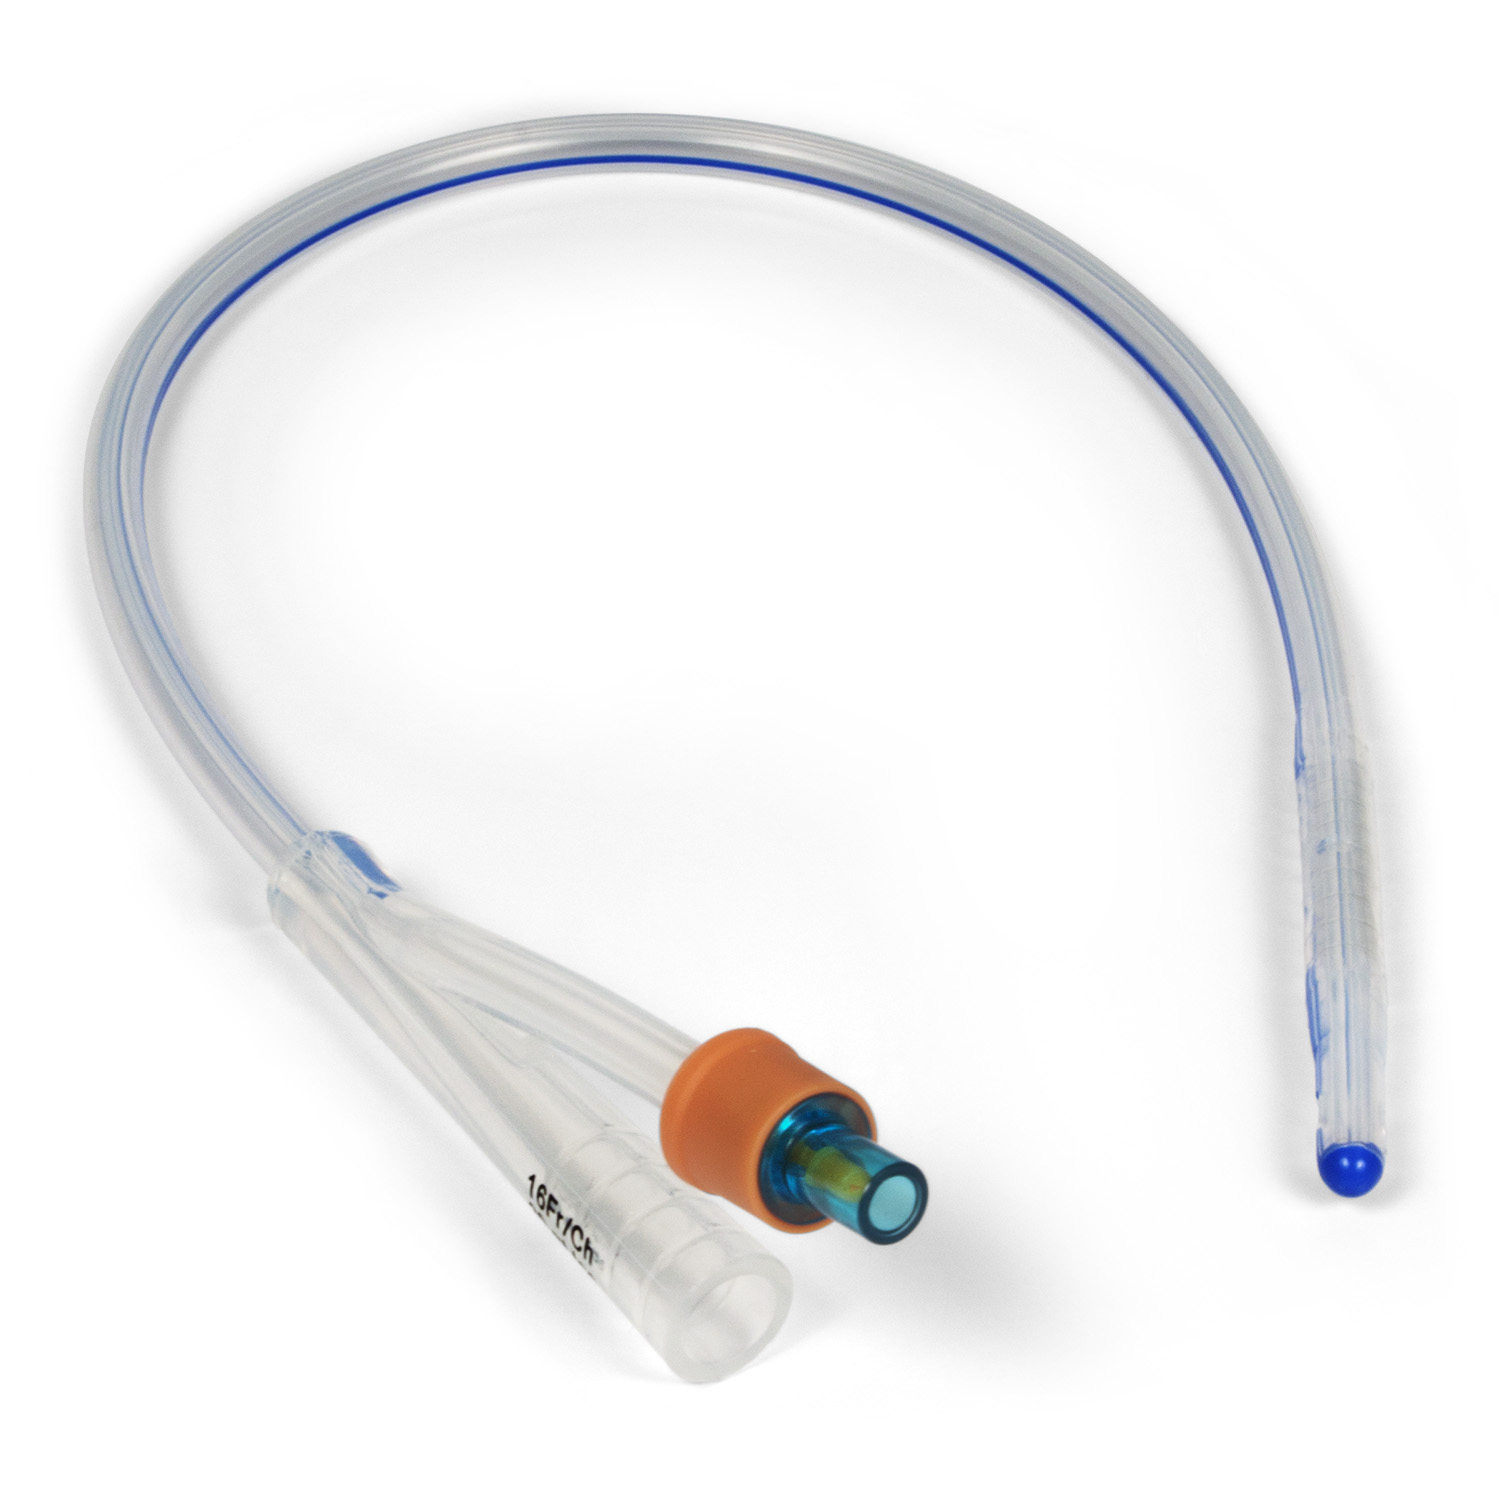 Silicone Foley Catheters 2-way Standard - 14FR / 5-10cc